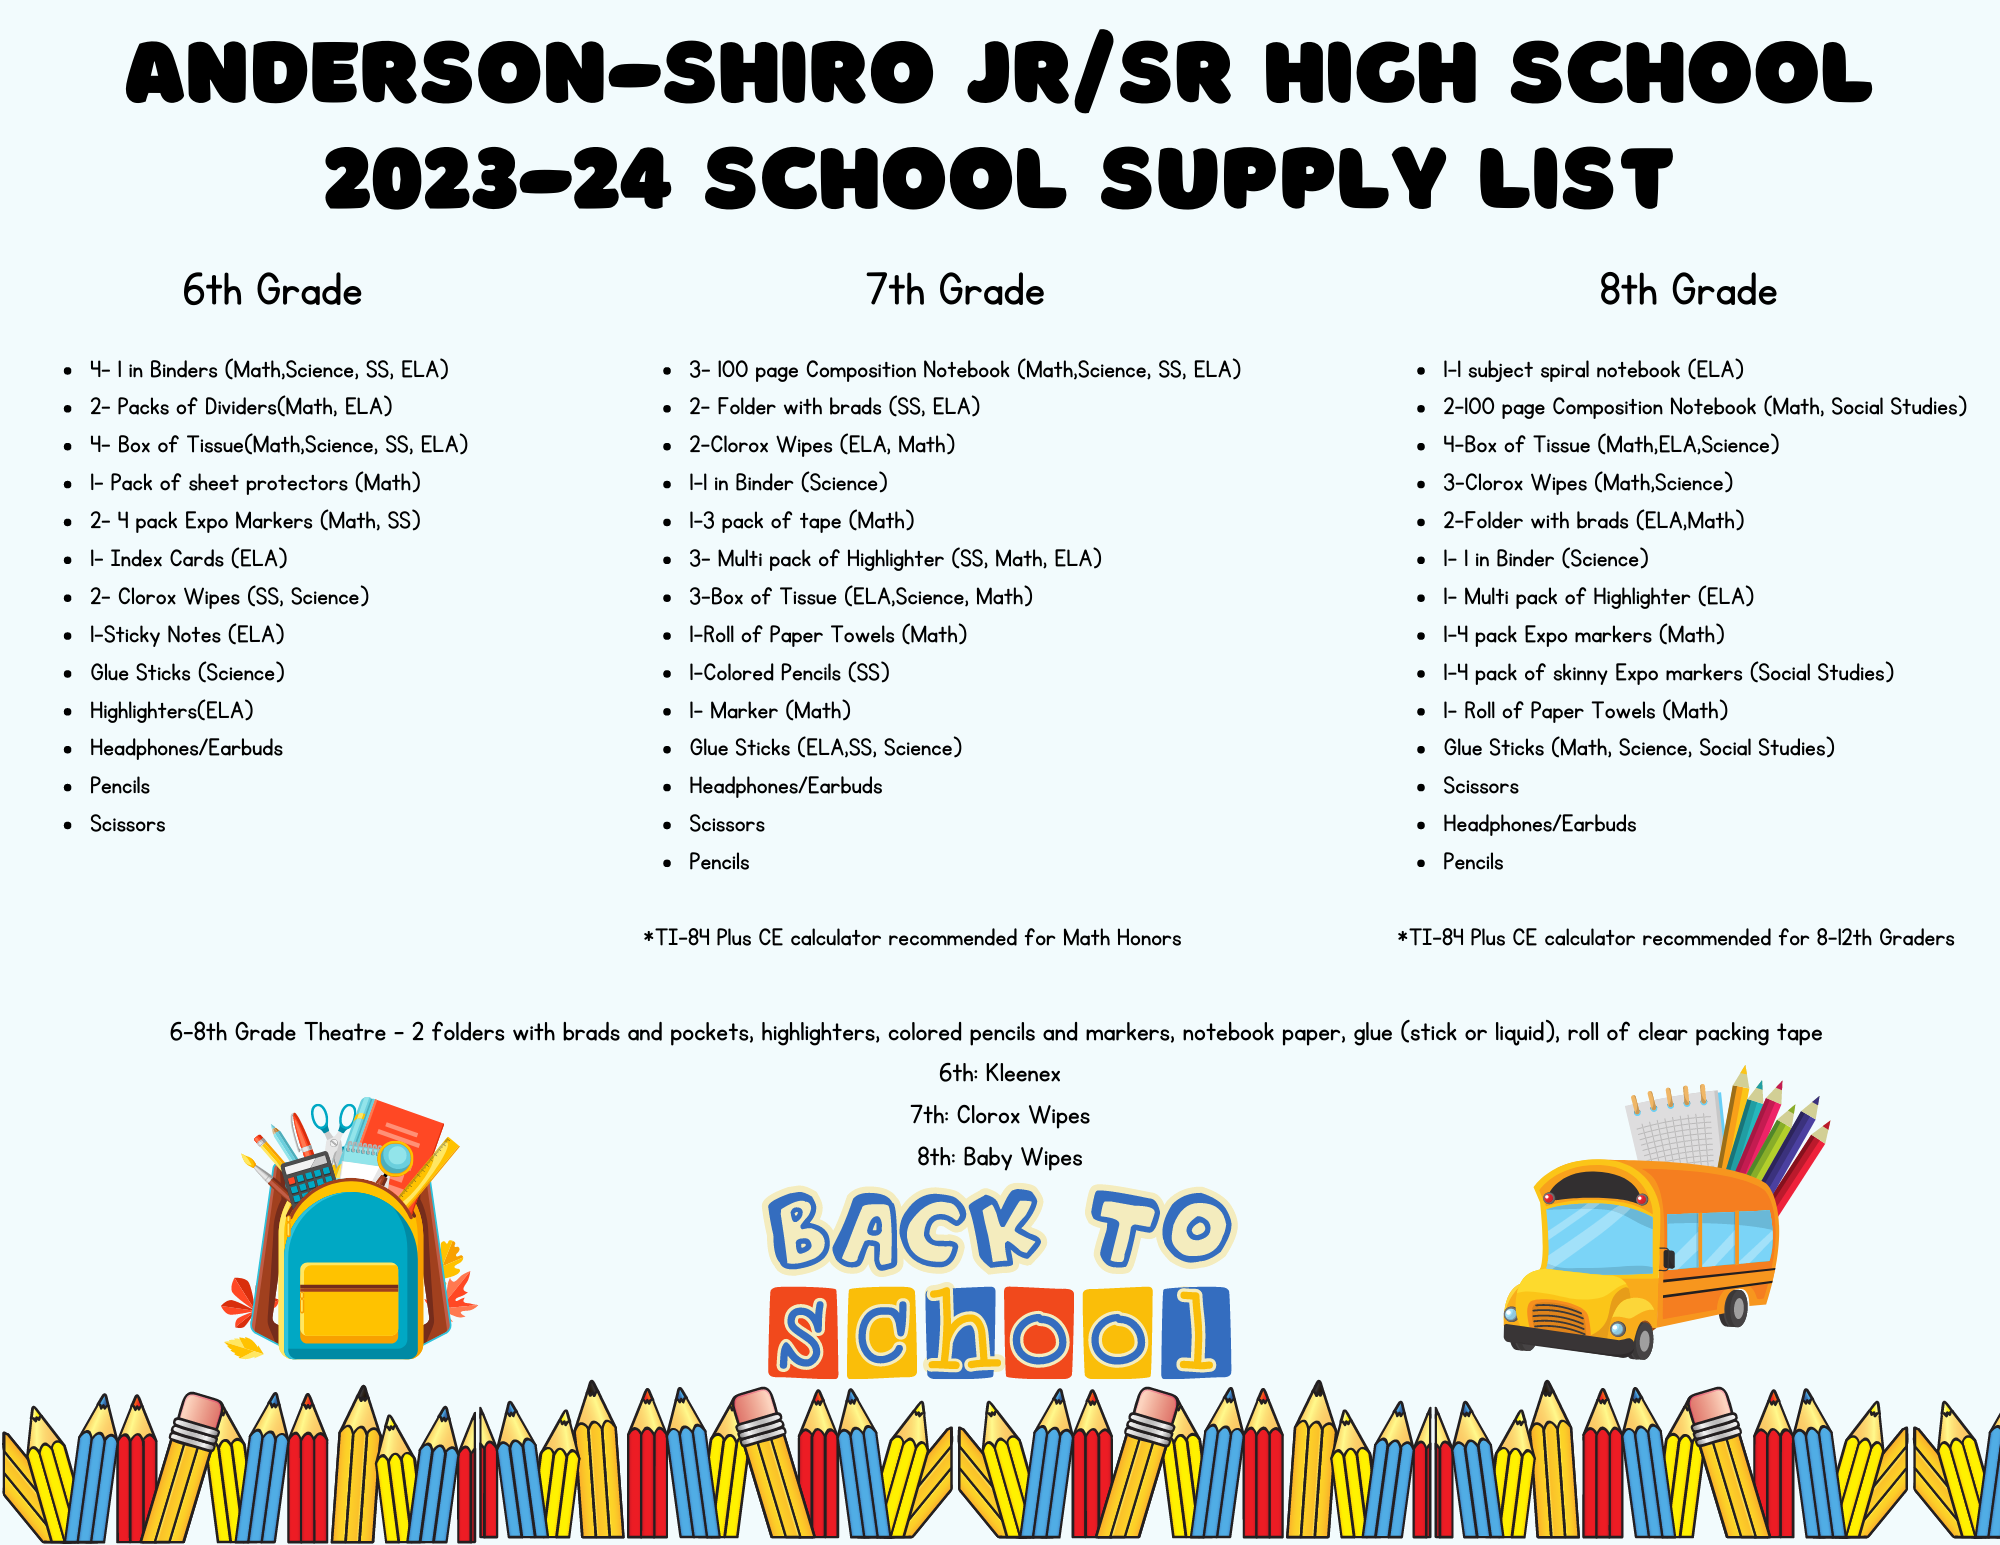 23-24 School Supply List - Jr/Sr High School